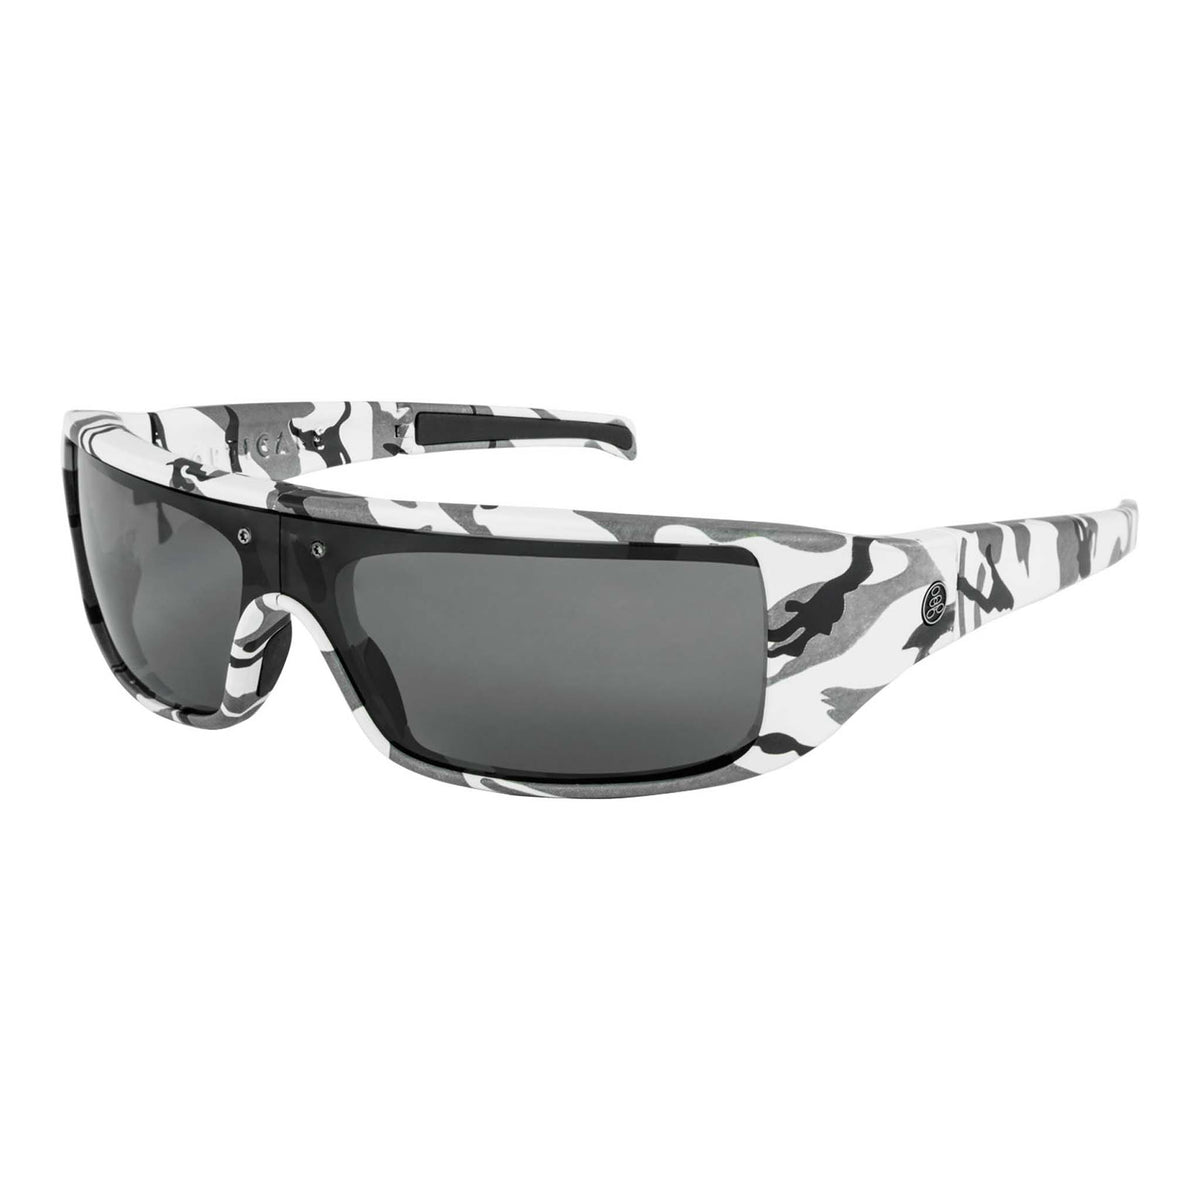 Popticals, Premium Compact Sunglasses, PopGear, 010050-CCGS, Standard Sunglasses, Matte White Camo Frame, Gray Lenses, Glam VIew